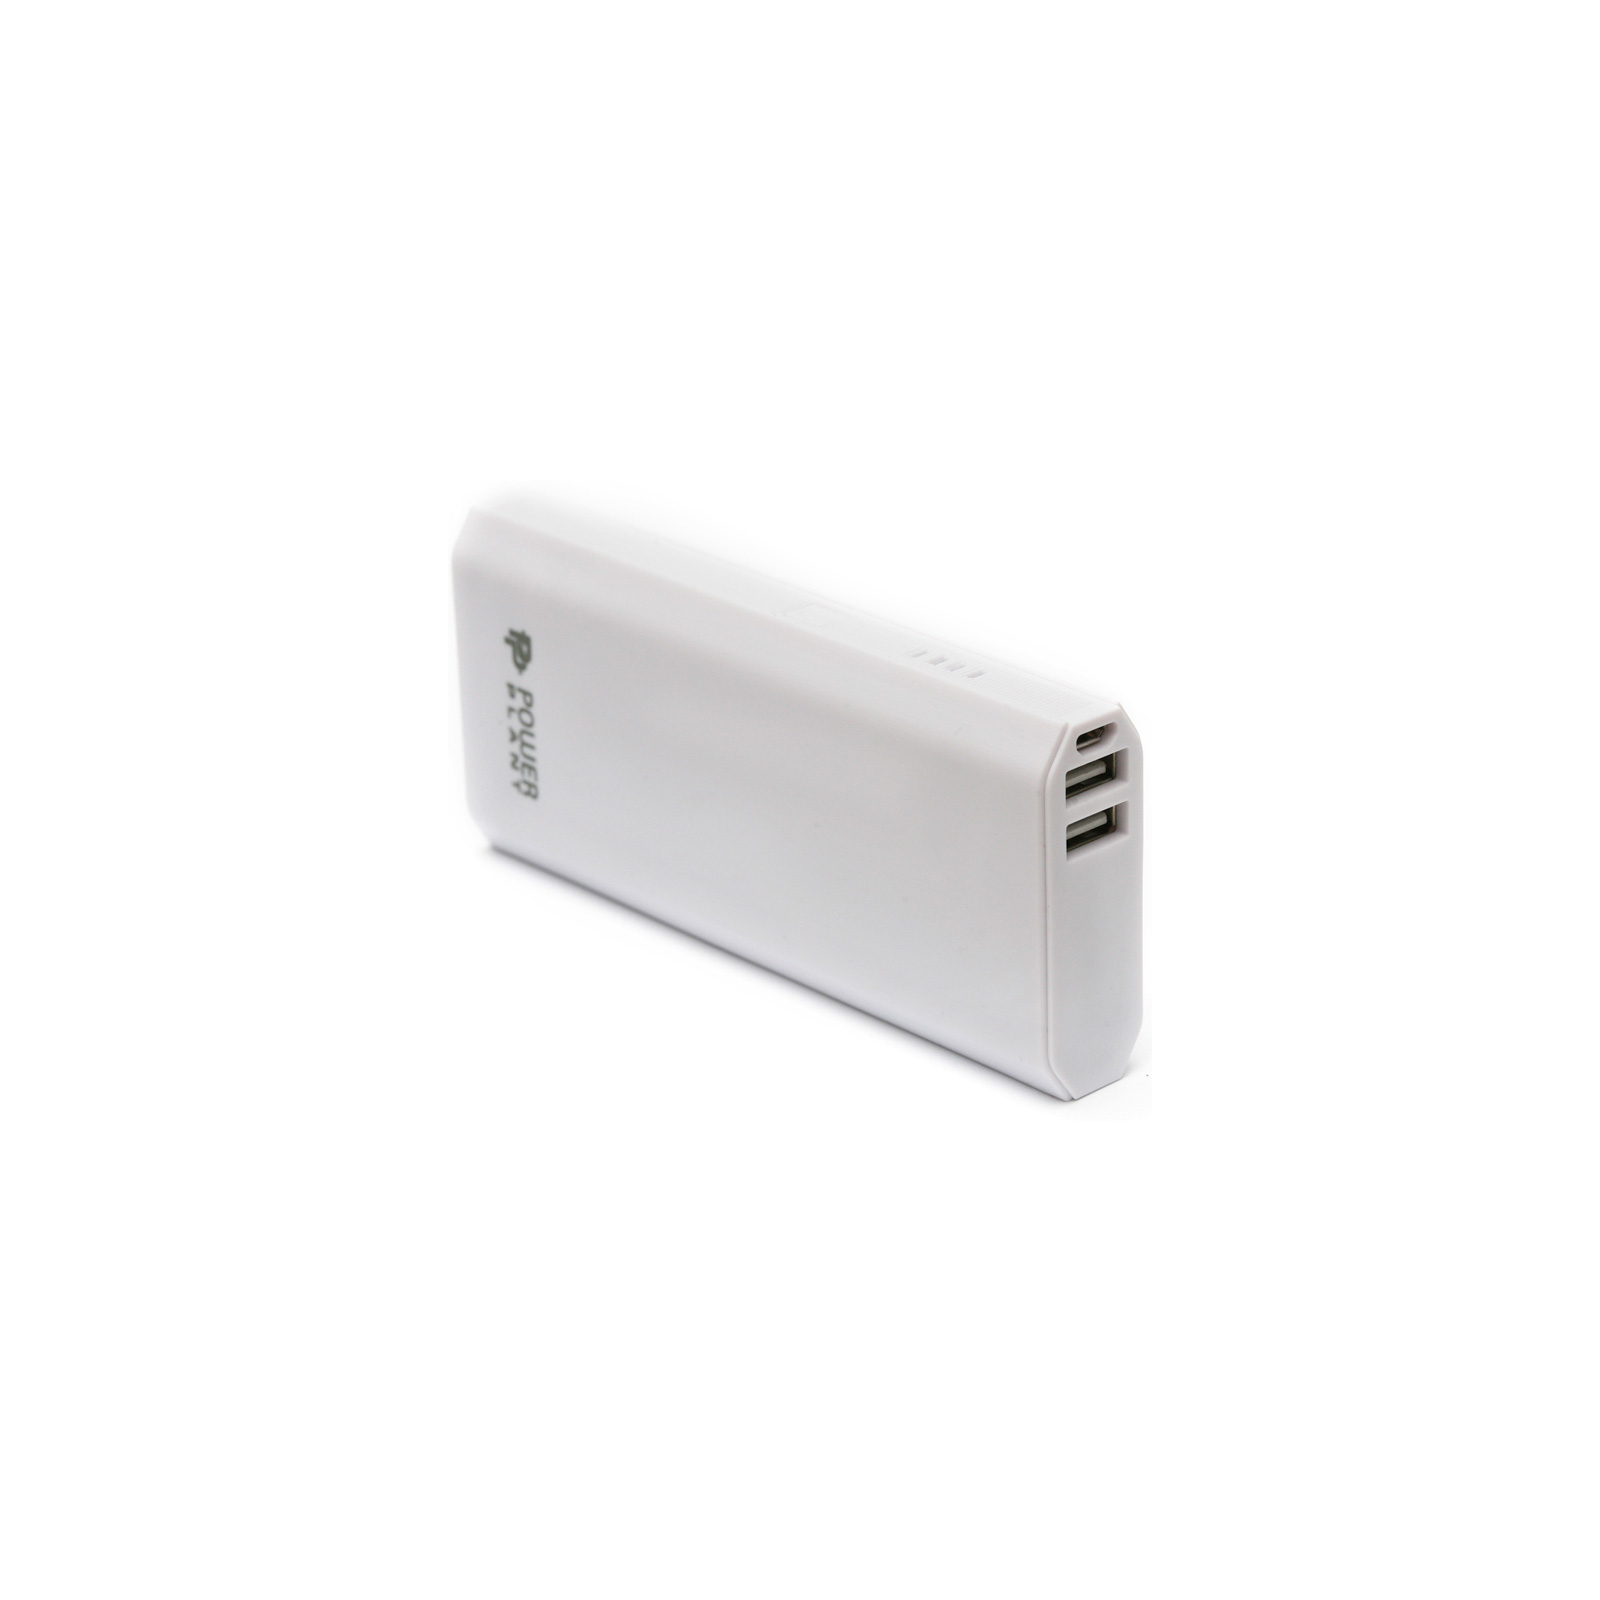 Батарея универсальная PowerPlant PB-LA9259 20000mAh 2*USB/1A 1*USB/2A (PPLA9259)